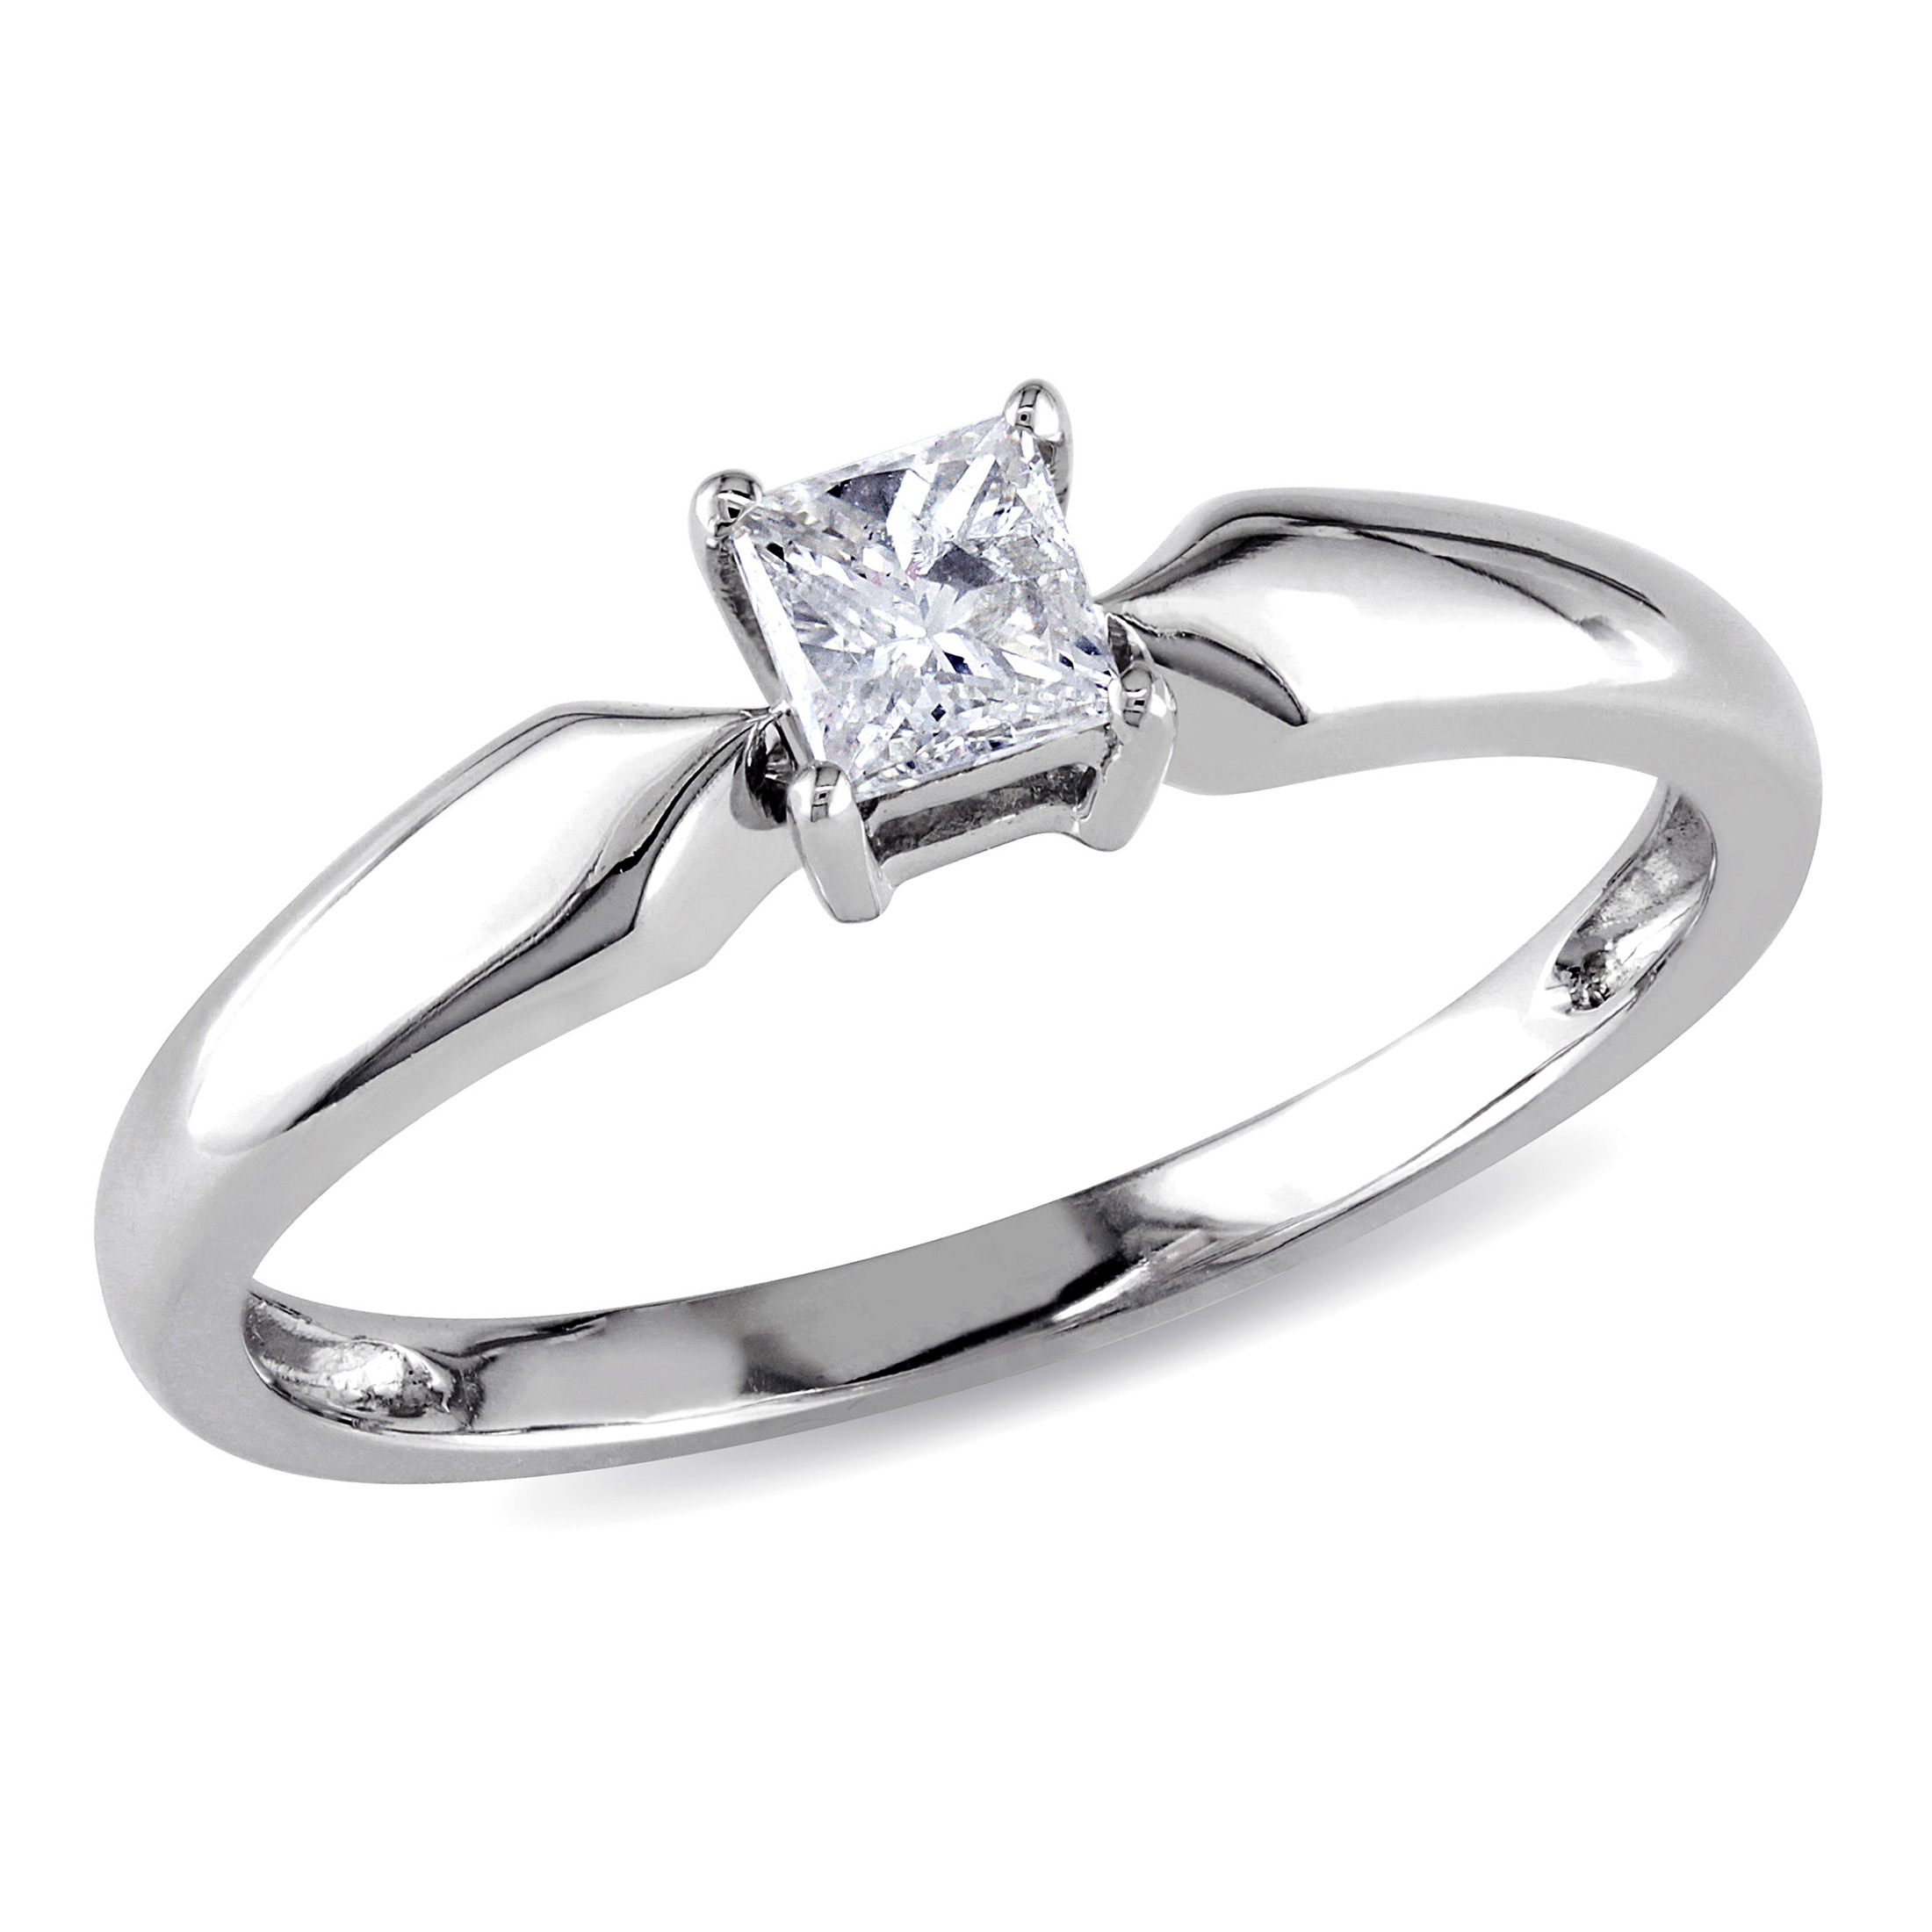 Miabella Women's 1/4 Carat T.W. Princess-Cut Diamond 10kt White Gold Solitaire Engagement Ring - image 1 of 6